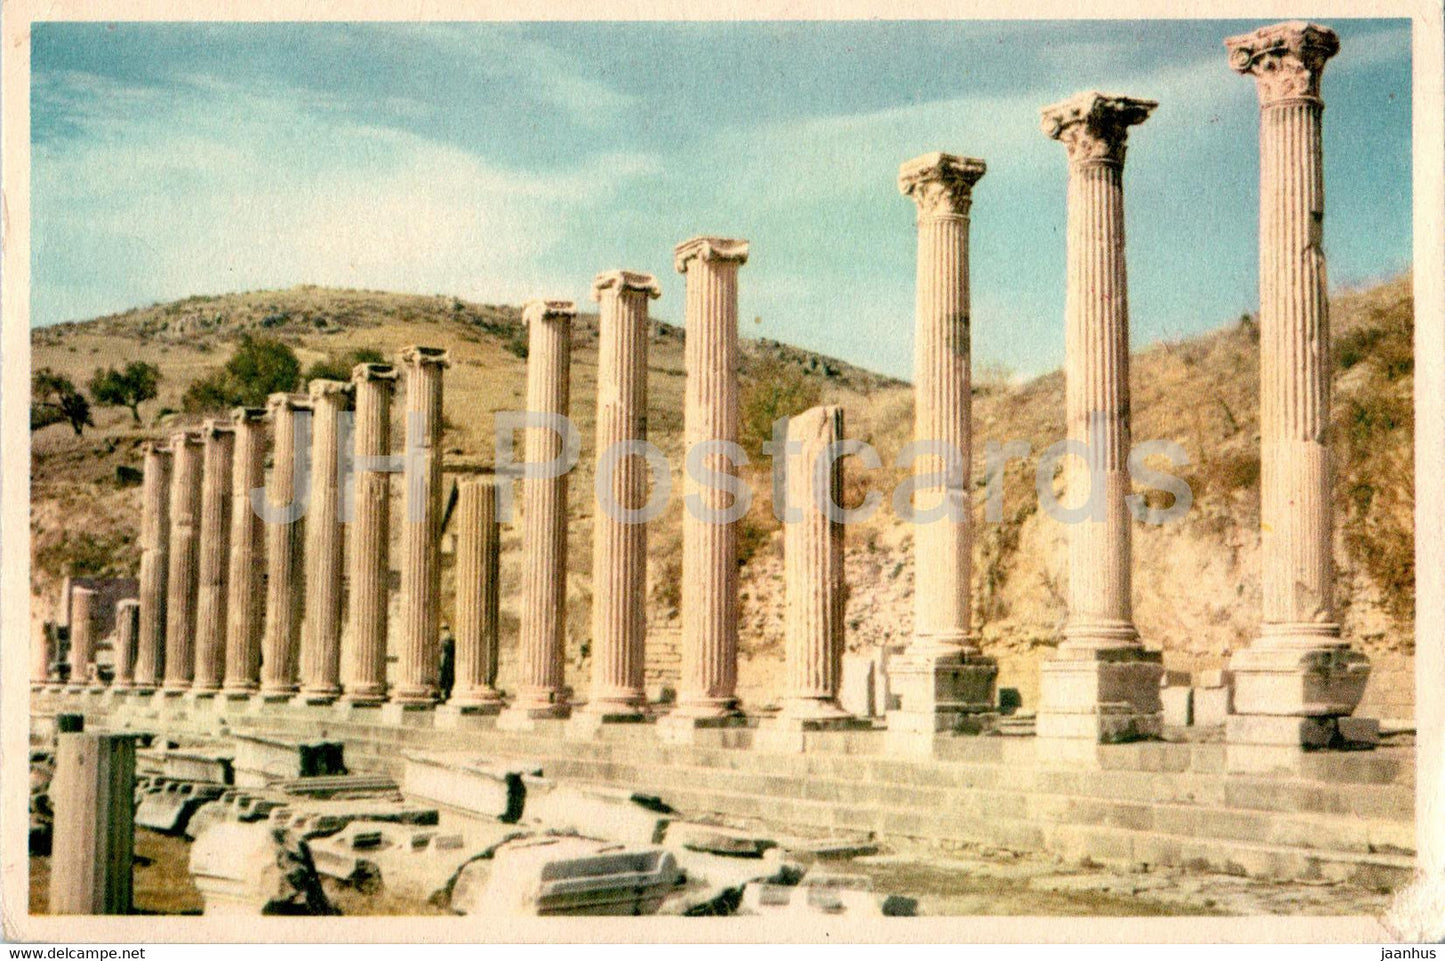 The Asculapium - Bergama - Pergamum - ancient world - old postcard - 1958 - Turkey - used - JH Postcards